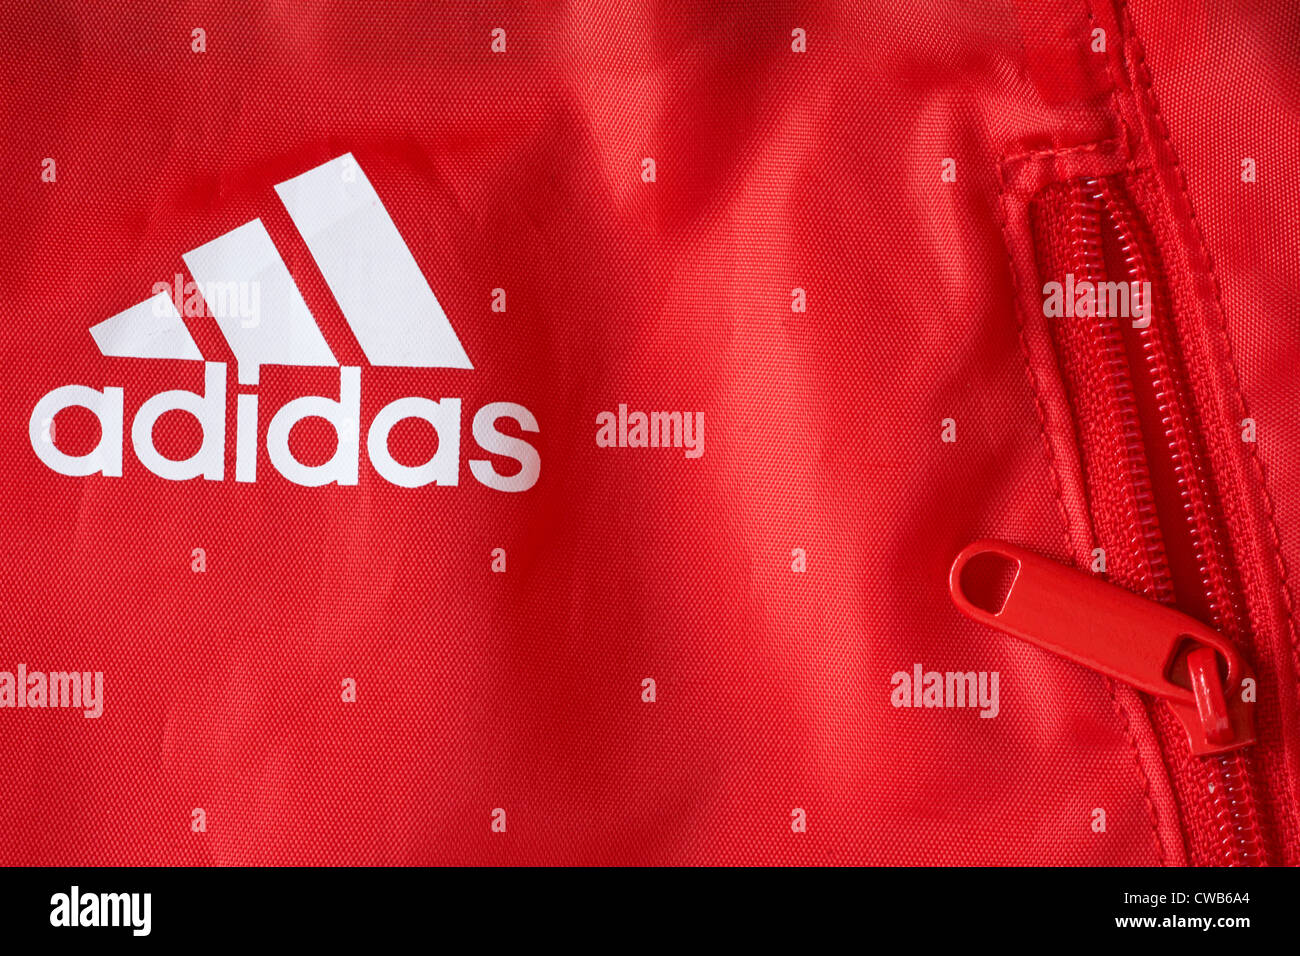 adidas logo and red zip zipper on Adidas drawstring bag Stock Photo - Alamy